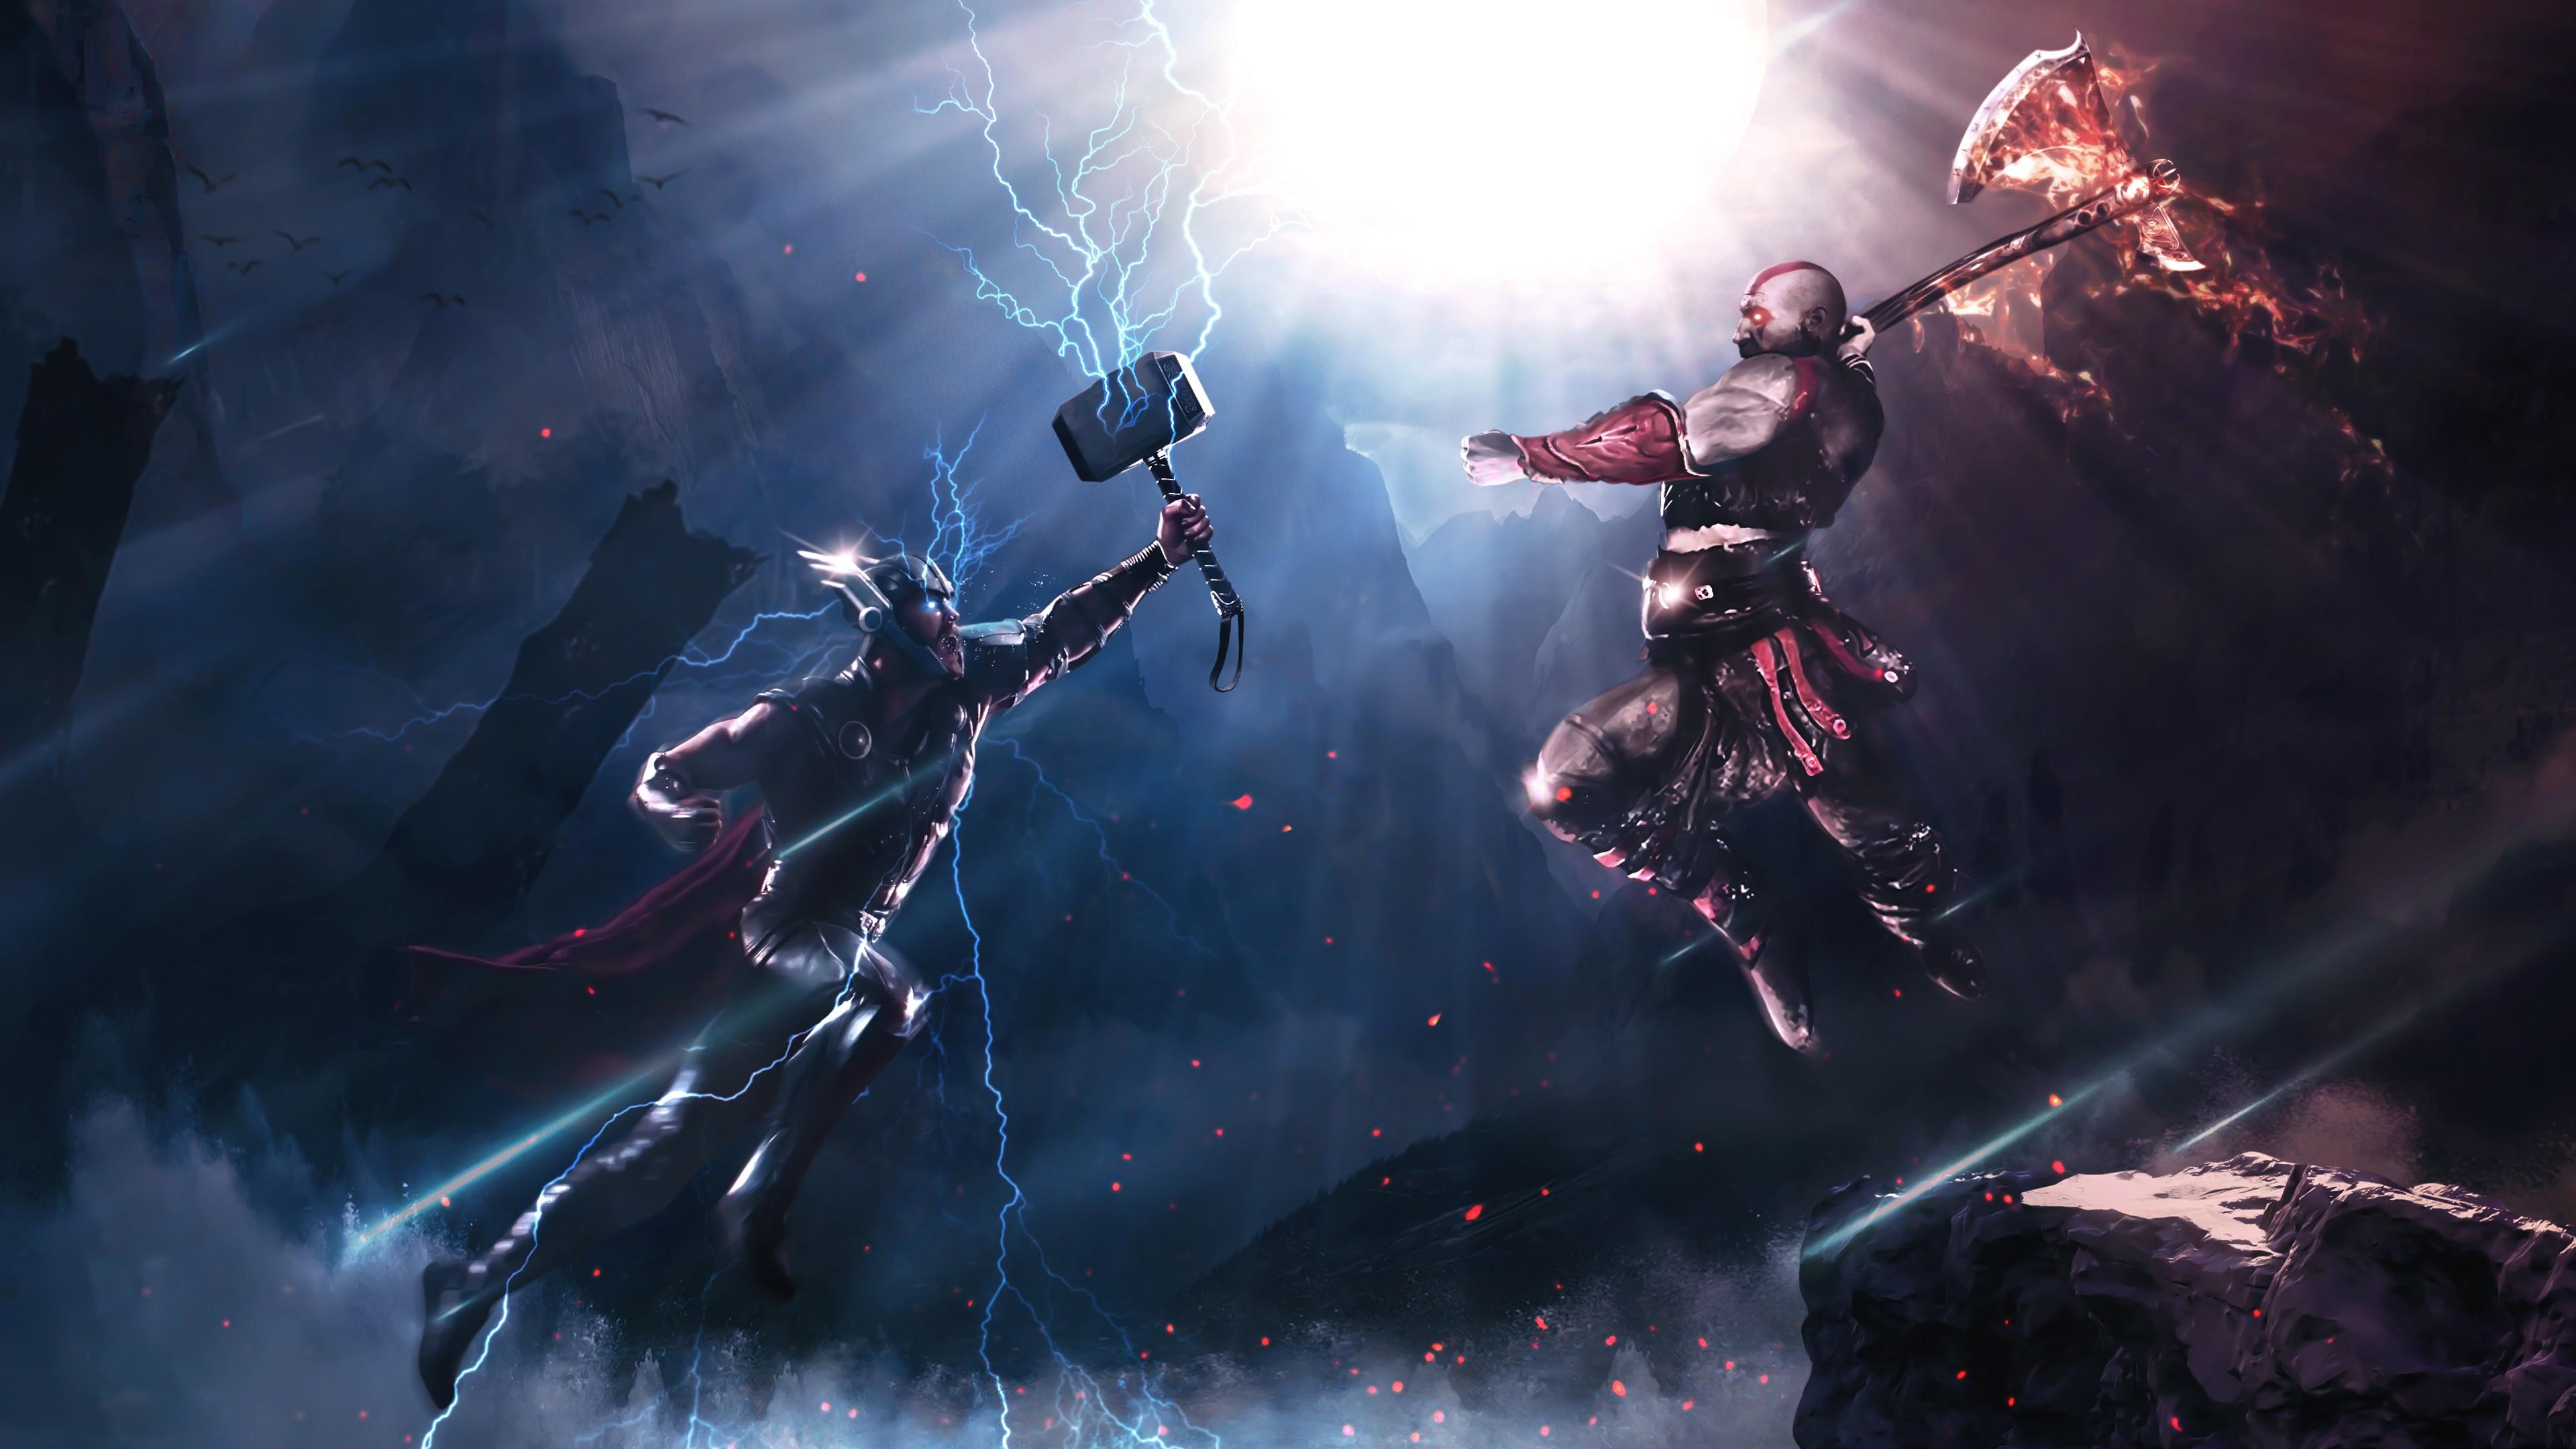 Thor VS Kratos 4k Ultra HD Wallpaper